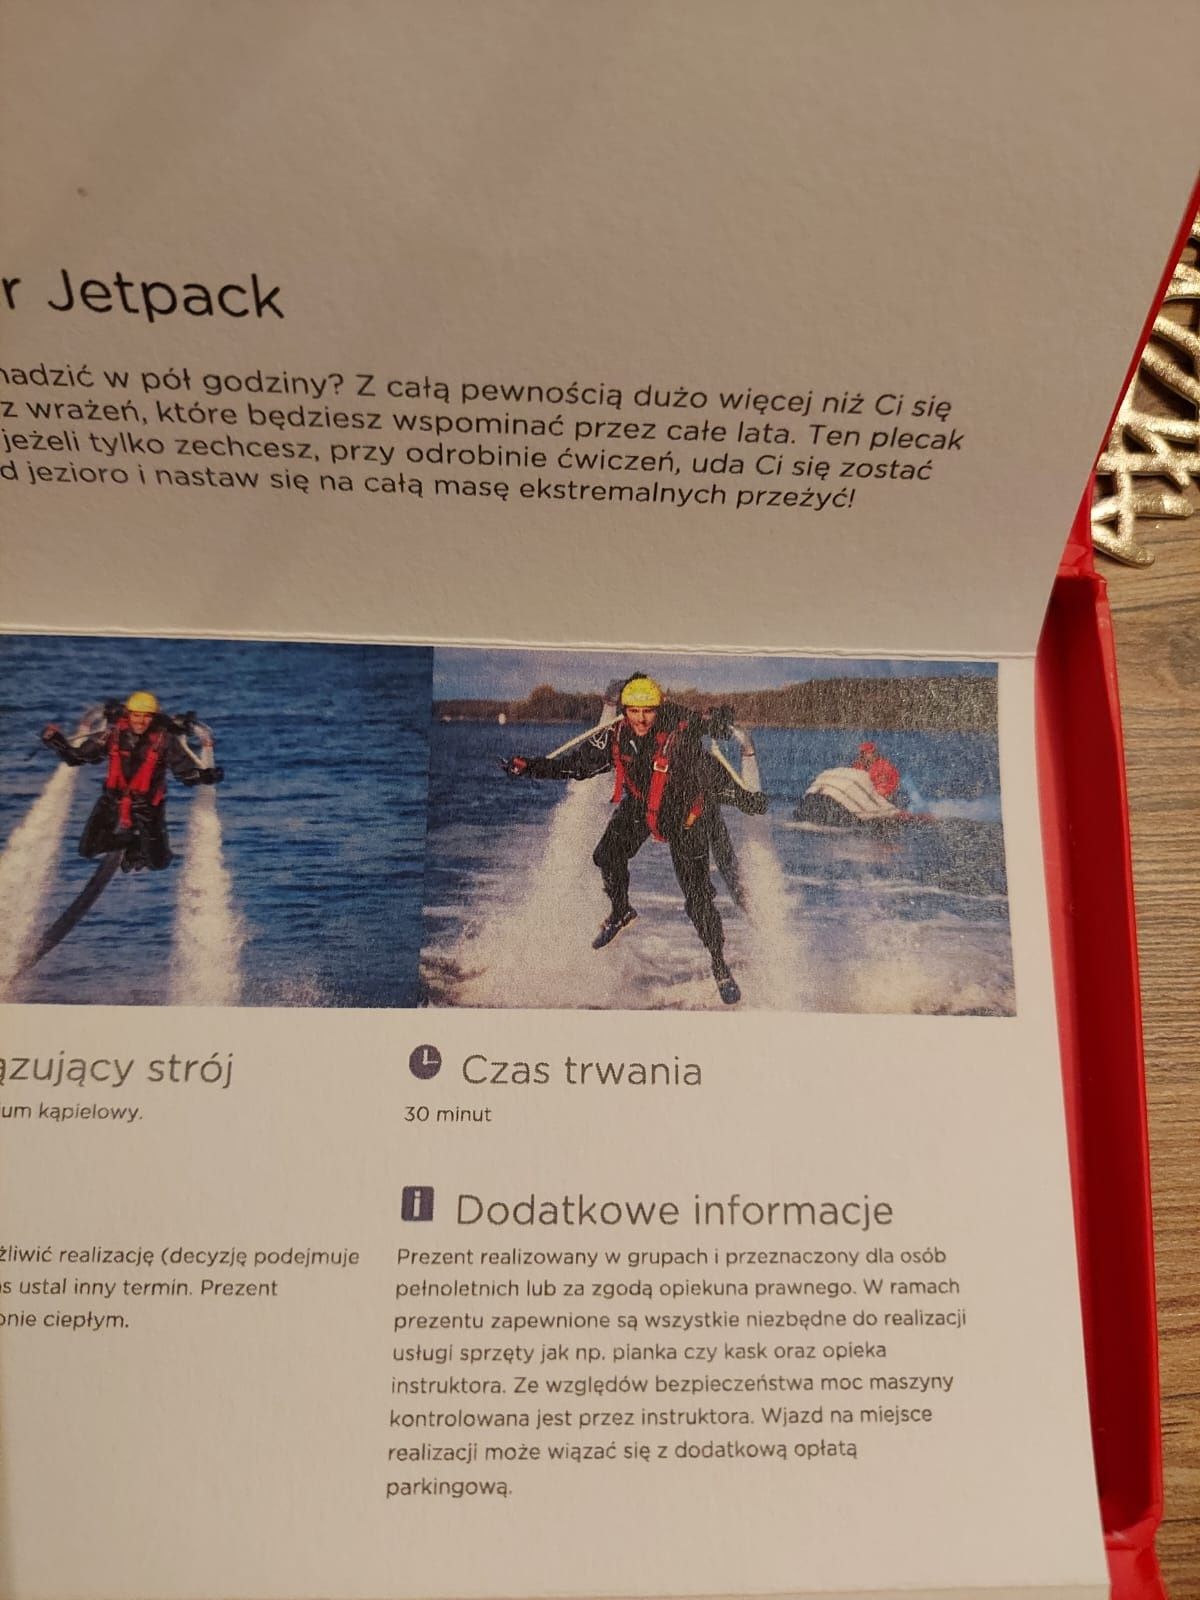 PrezentMarzeń - Water Jetpack